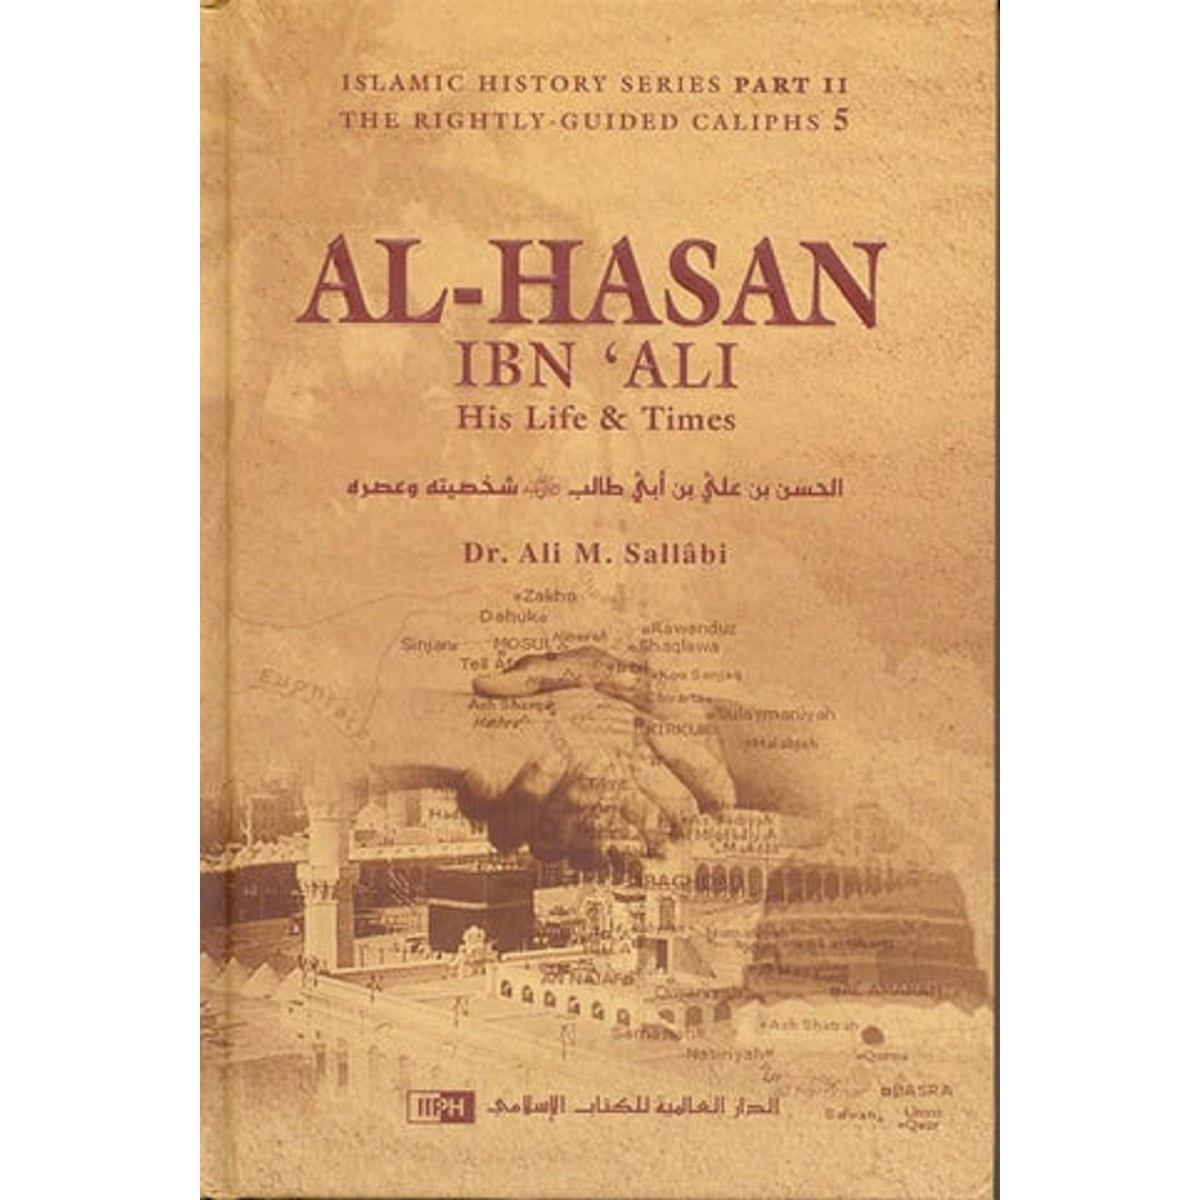 https://www.tarbiyahbooksplus.com/shop/islamic-history-and-civilization/al-hasan-ibn-ali-his-life-times/